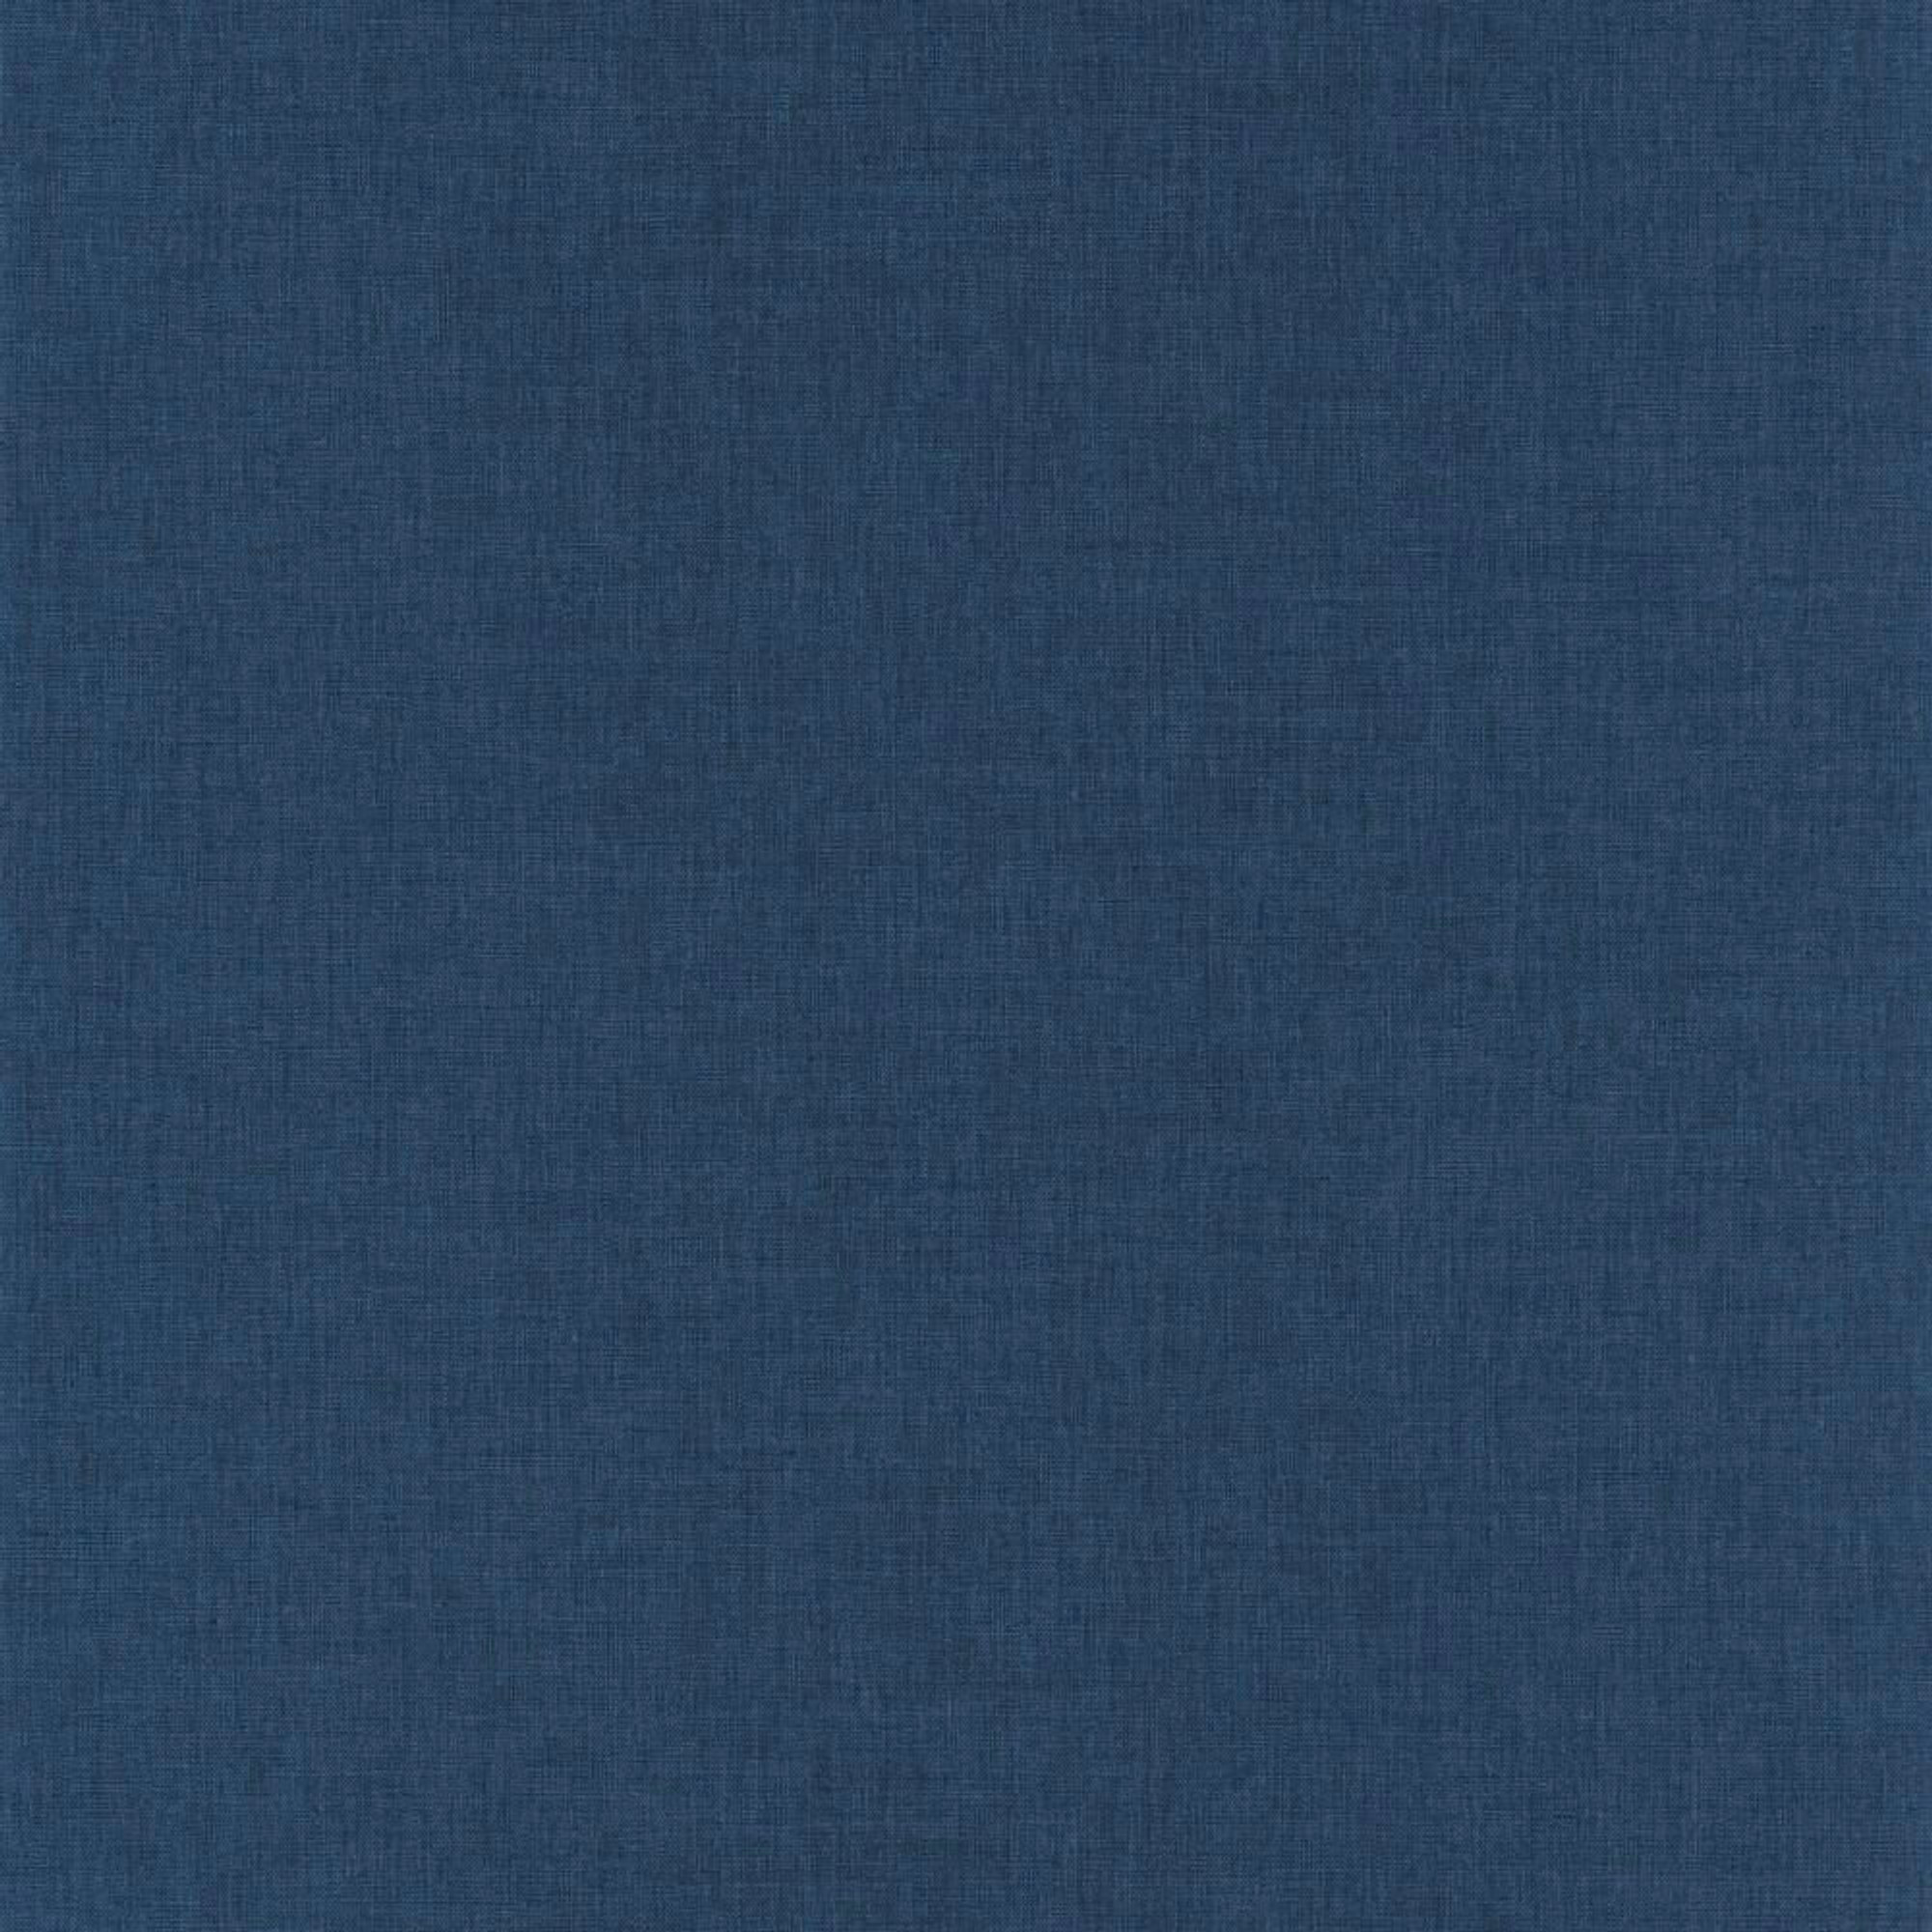 Navy Blue Linen Textured Vinyl Wallpaper Caselio